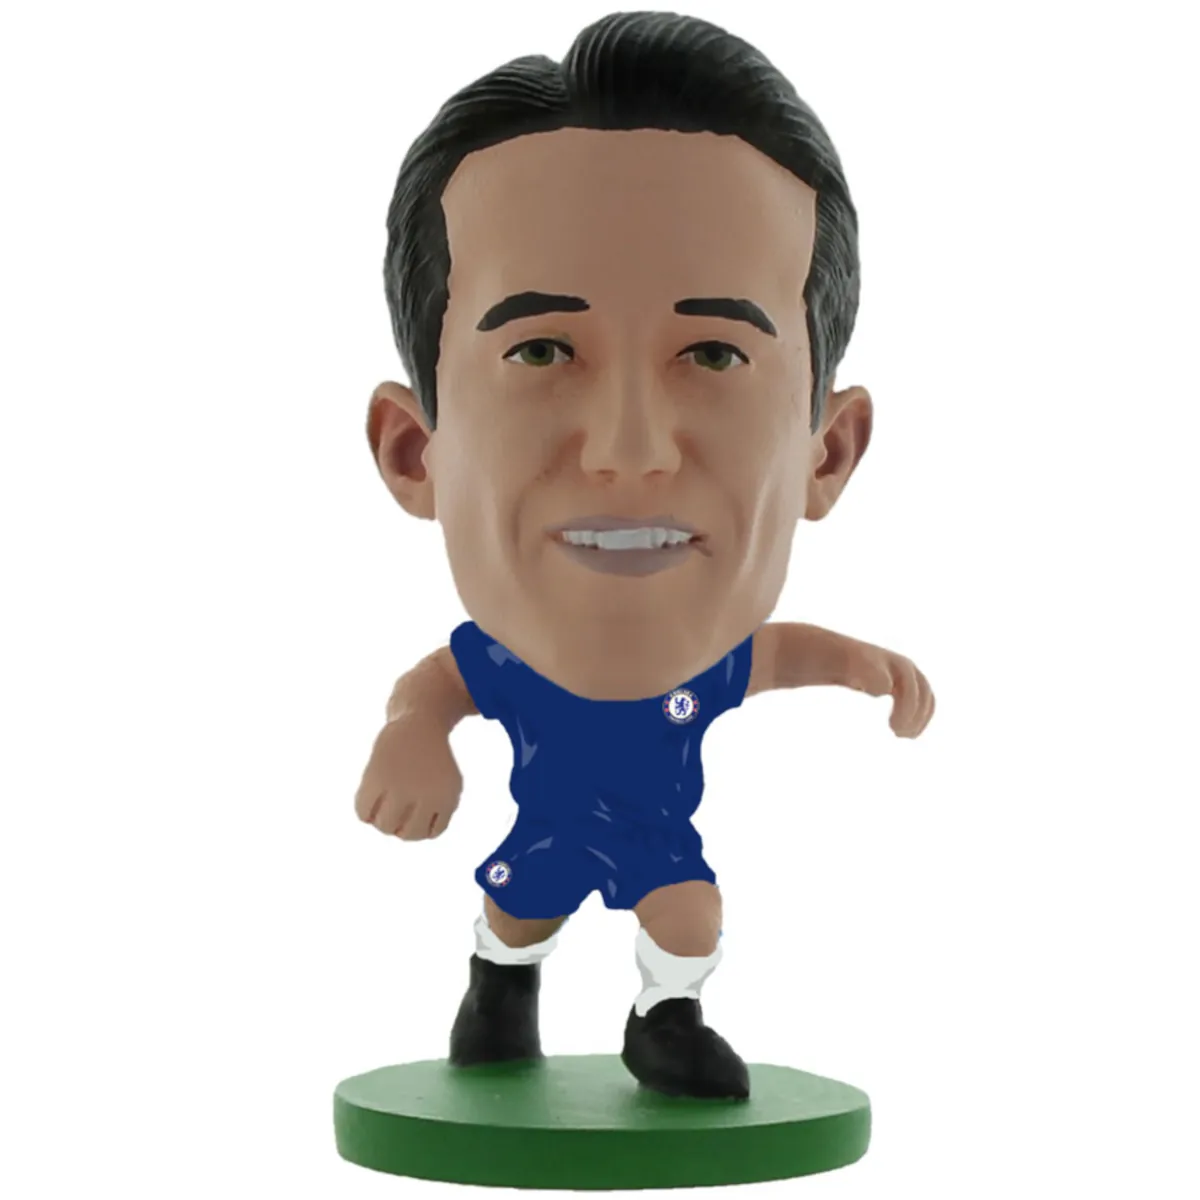 187412 Chelsea FC SoccerStarz Collectable Figure - Ben Chilwell